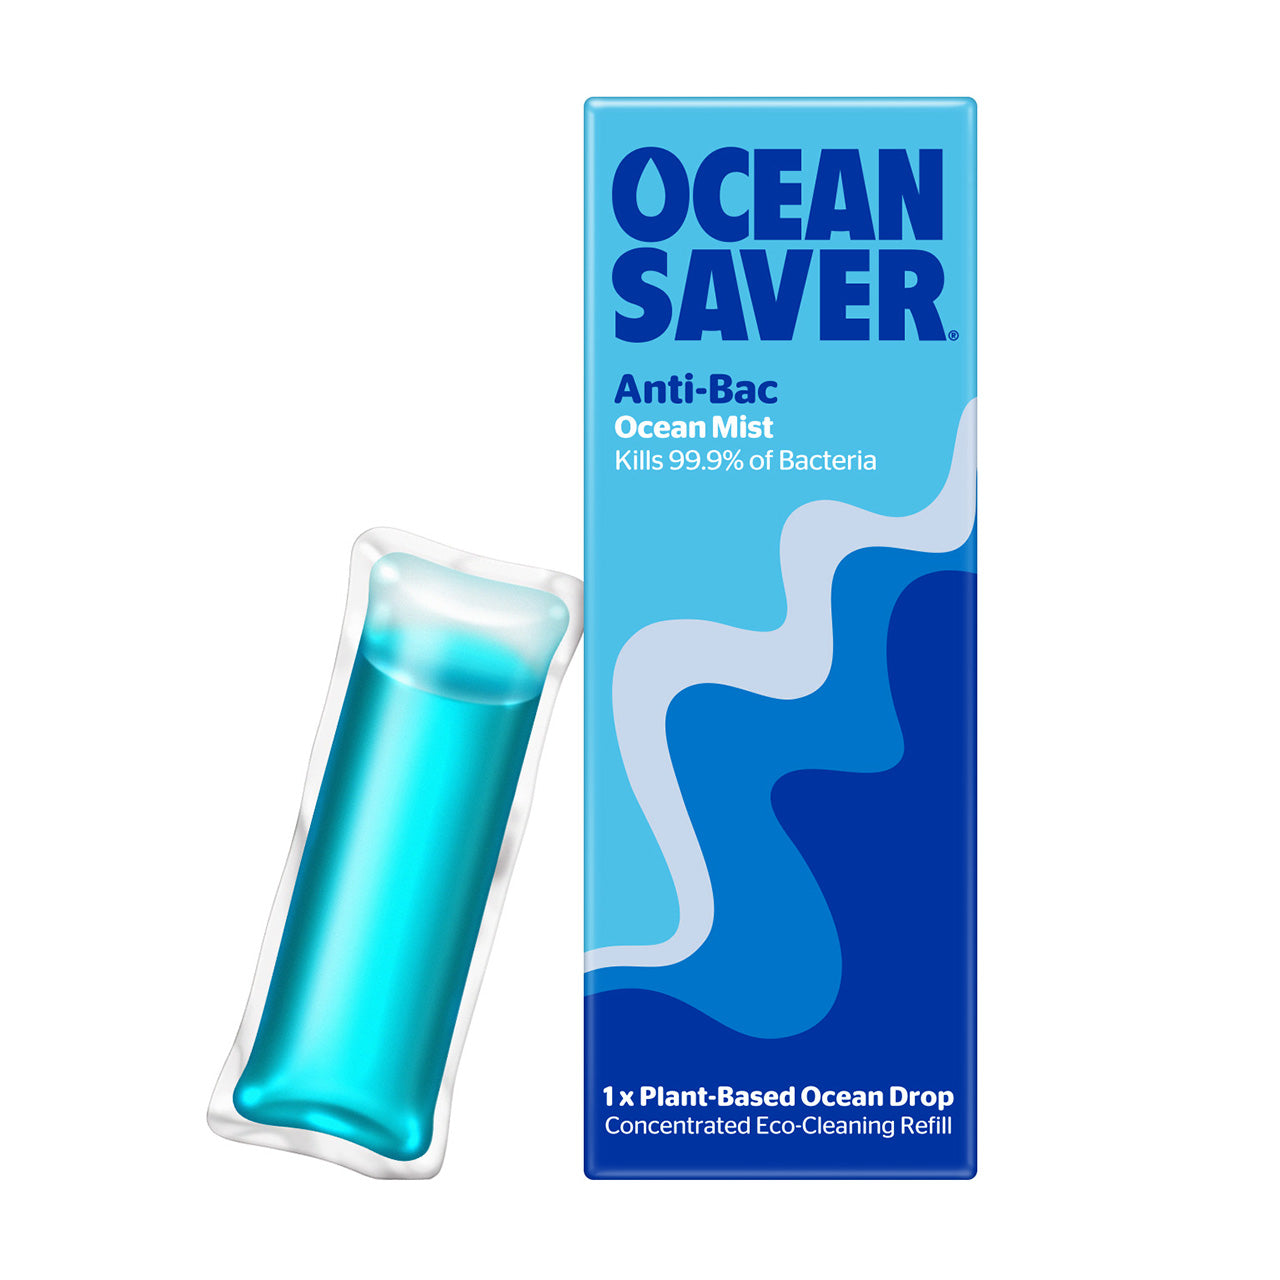 Ocean saver cleaning pod antibacterial